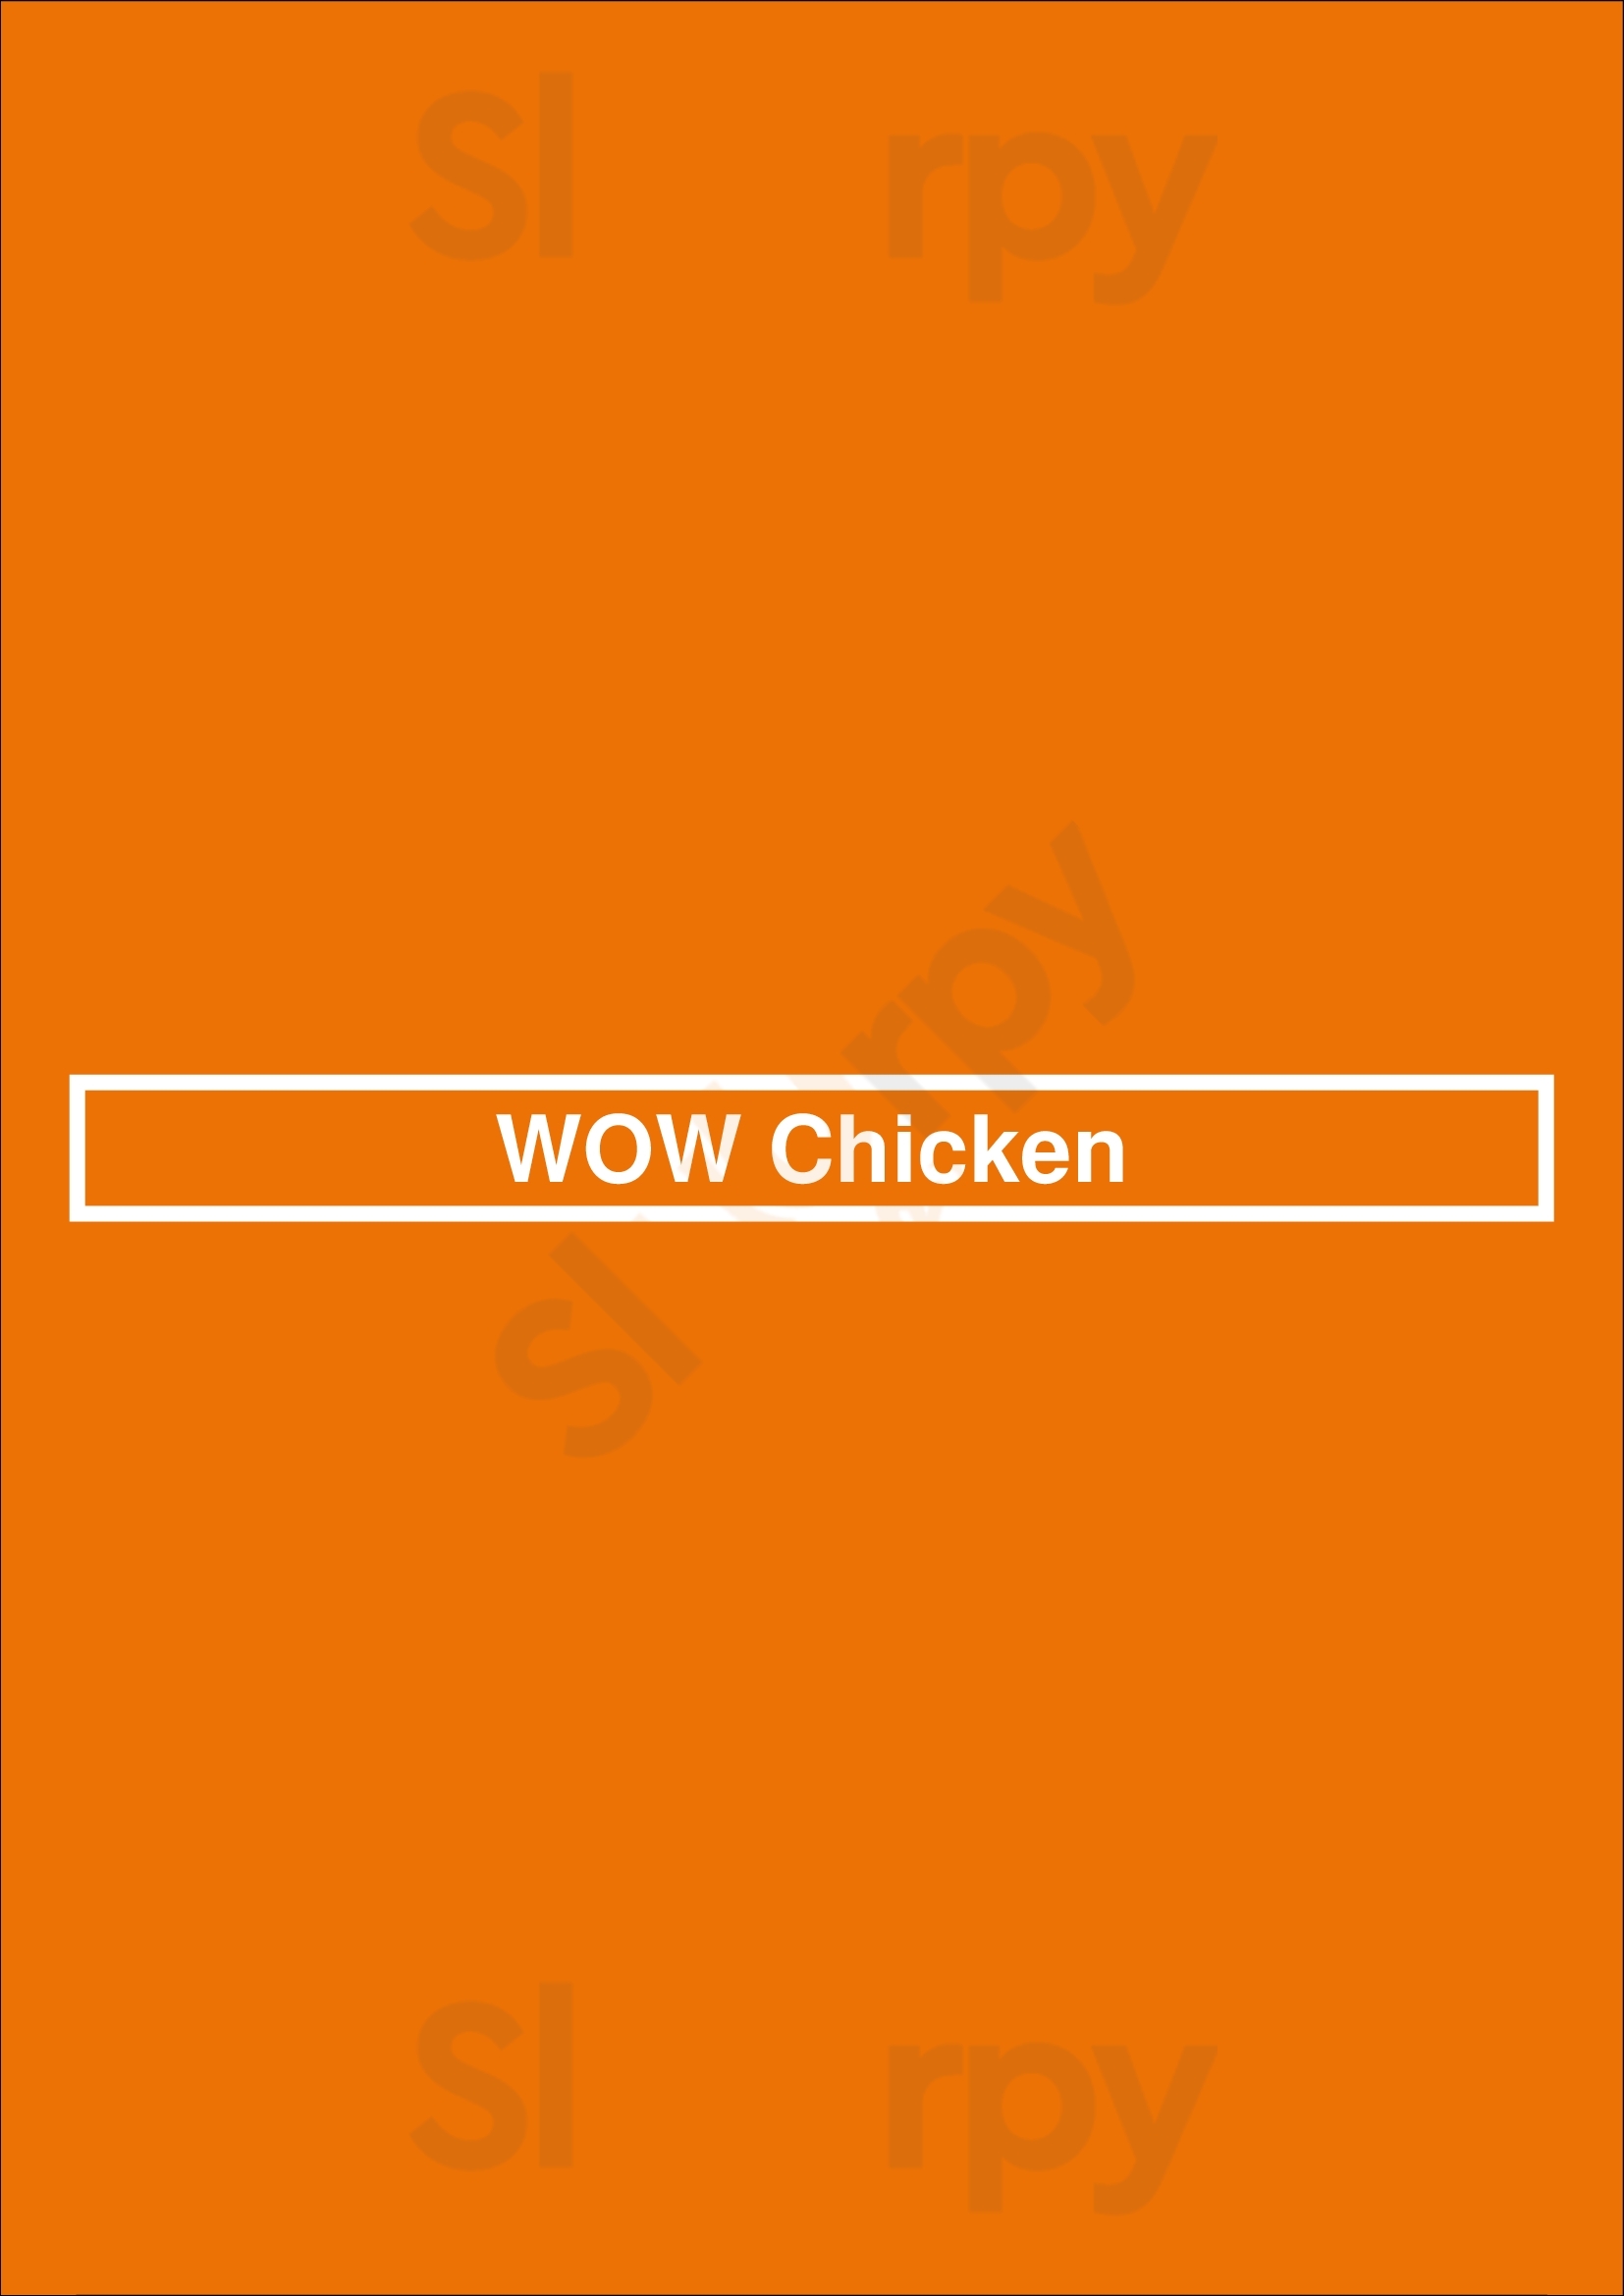 Wow Chicken Calgary Menu - 1